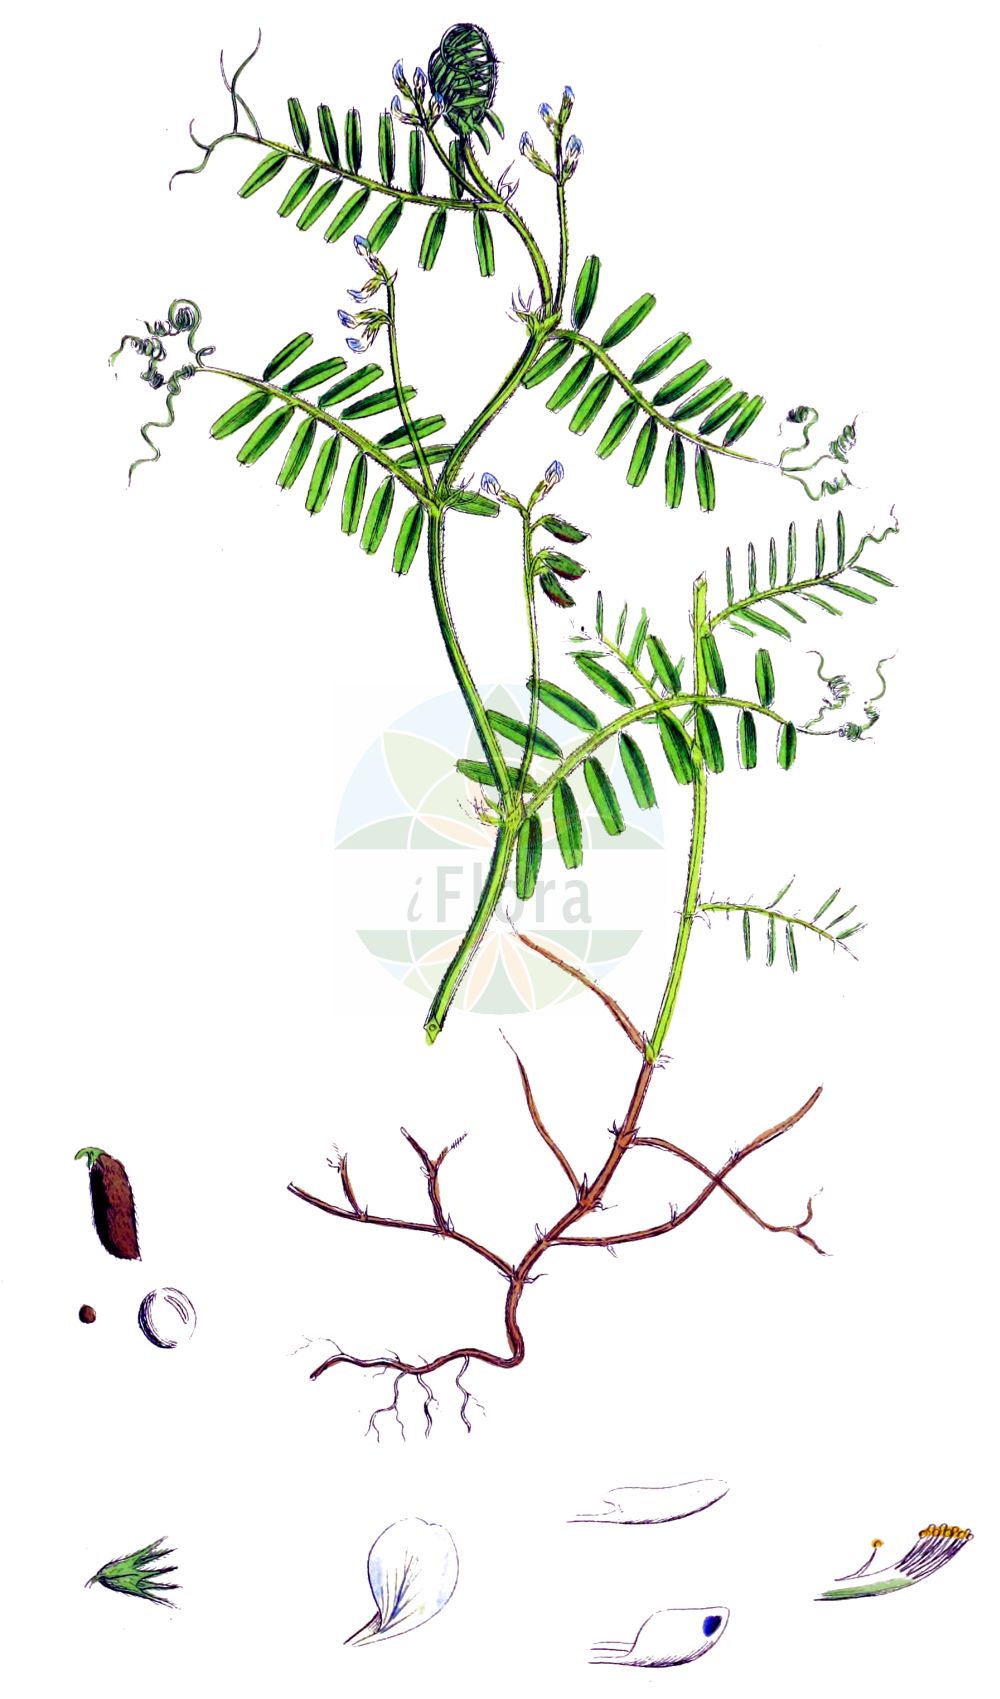 Historische Abbildung von Vicia hirsuta (Behaarte Wicke - Hairy Tare). Das Bild zeigt Blatt, Bluete, Frucht und Same. ---- Historical Drawing of Vicia hirsuta (Behaarte Wicke - Hairy Tare). The image is showing leaf, flower, fruit and seed.(Vicia hirsuta,Behaarte Wicke,Hairy Tare,Cracca hirsuta,Cracca minor,Endiusa hirsuta,Ervilia hirsuta,Ervilia vulgaris,Ervum filiforme,Ervum hirsutum,Vicia coreana,Vicia hirsuta,Vicia mitchellii,Vicia parviflora,Vicia taquetii,Vicioides hirsuta,Behaarte Wicke,Zitter-Wicke,Hairy Tare,Common Hairy Tare,Hairy Vetch,Tiny Vetch,Tyne Grass,Vicia,Wicke,Vetch,Fabaceae,Schmetterlingsblütler,Pea family,Blatt,Bluete,Frucht,Same,leaf,flower,fruit,seed,Sowerby (1790-1813))